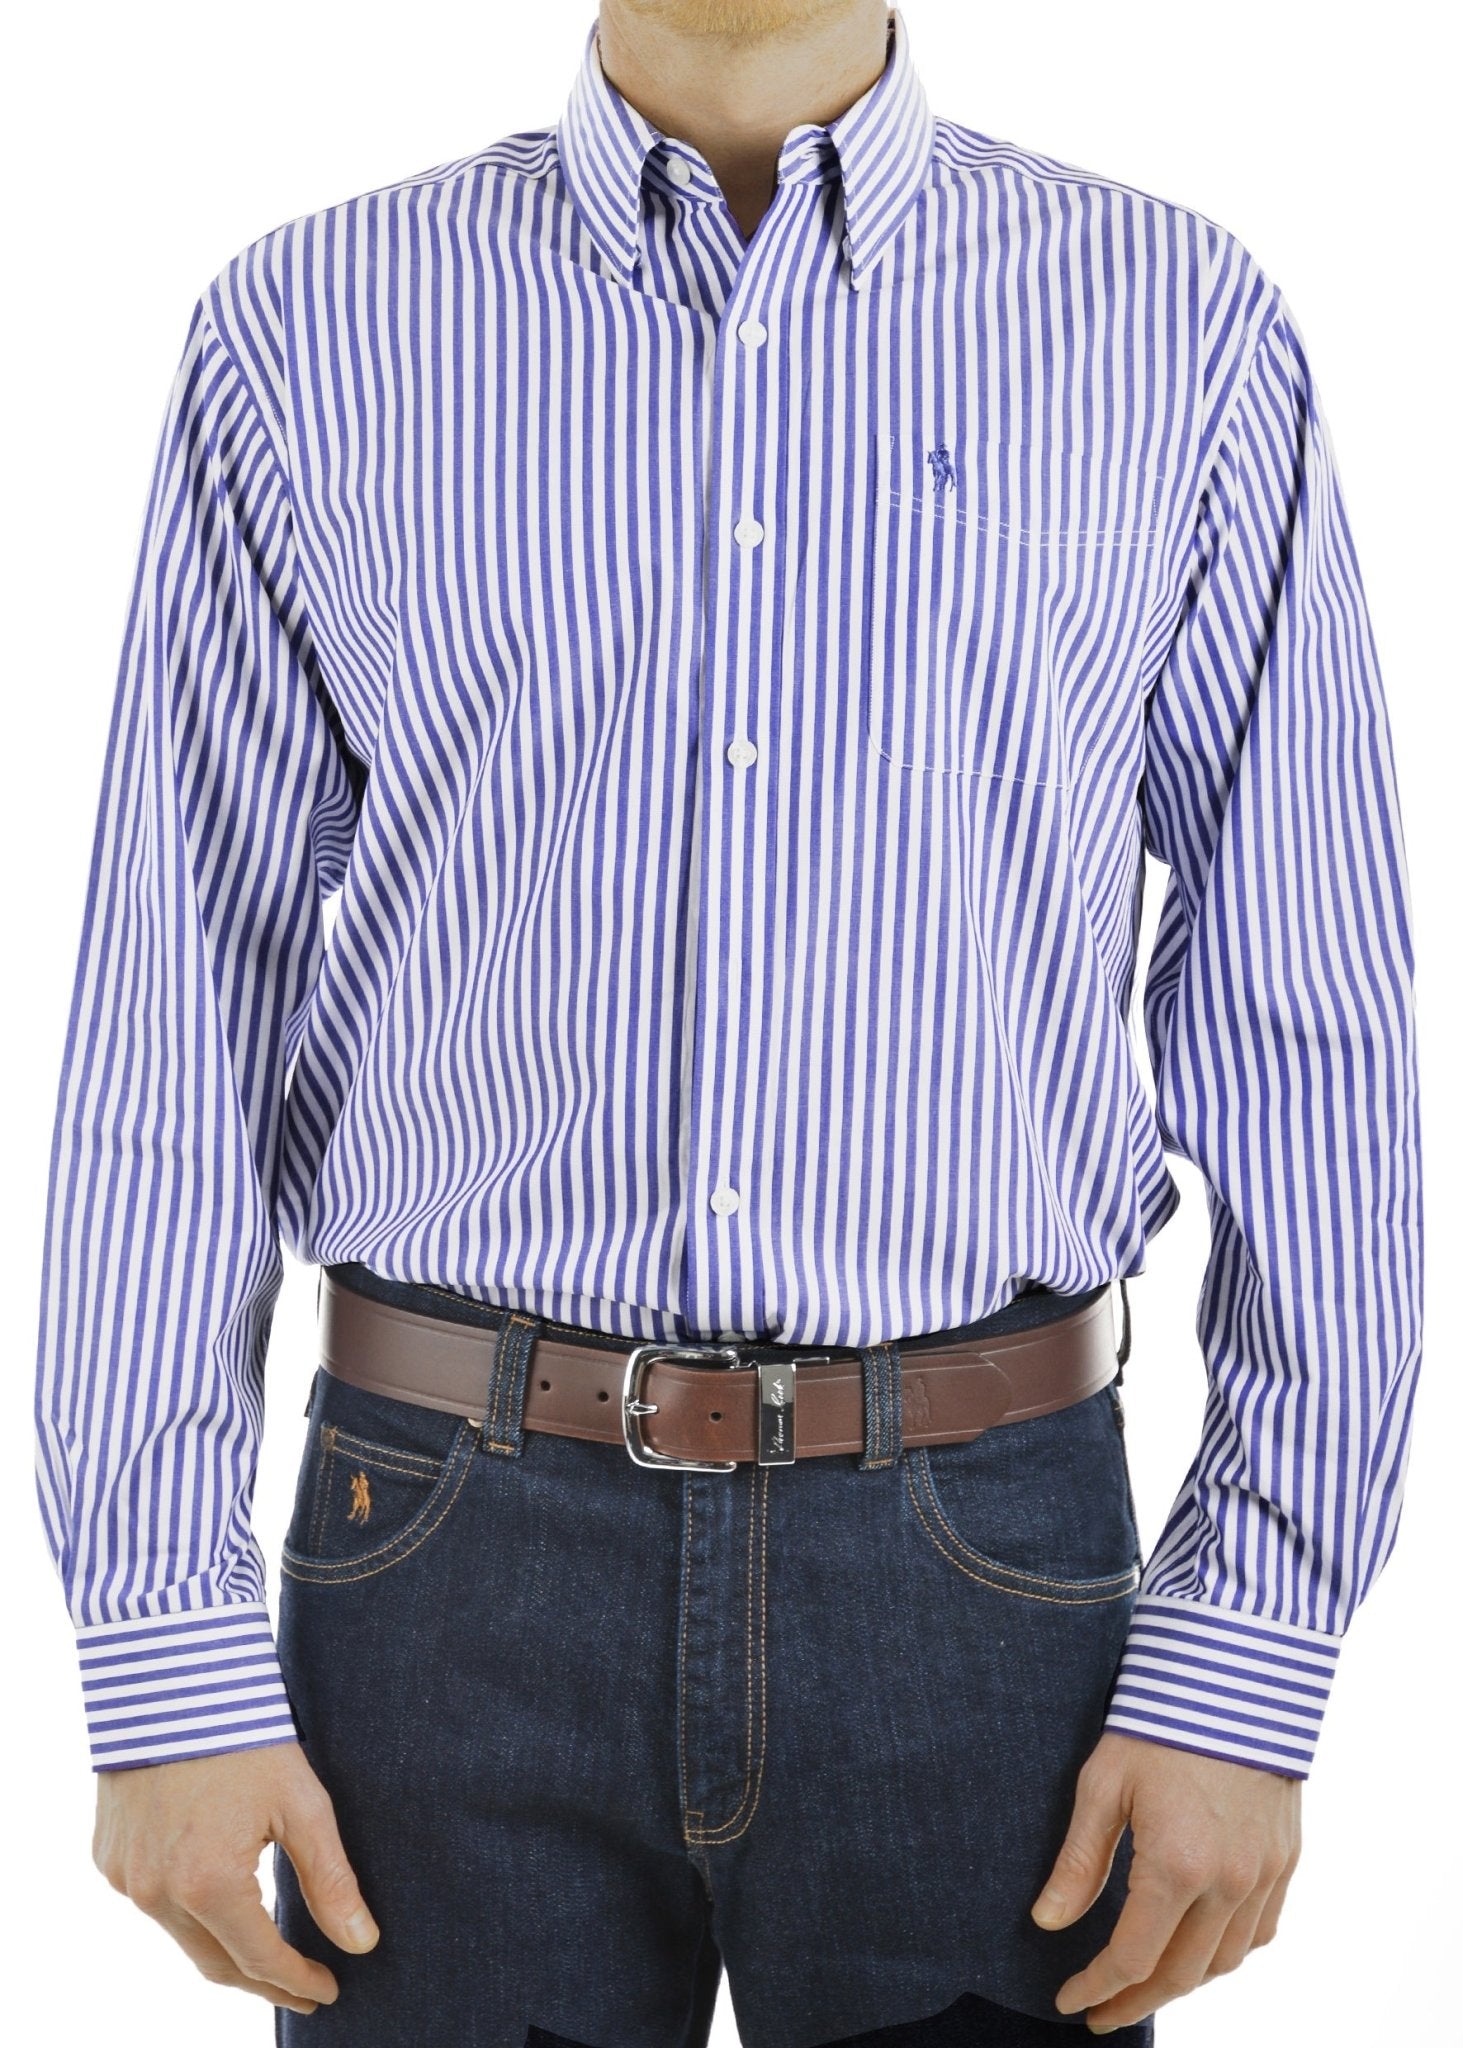 Thomas Cook Lawson Bengal Stripe - Thomson's Suits Ltd - Blue White - S - 44159